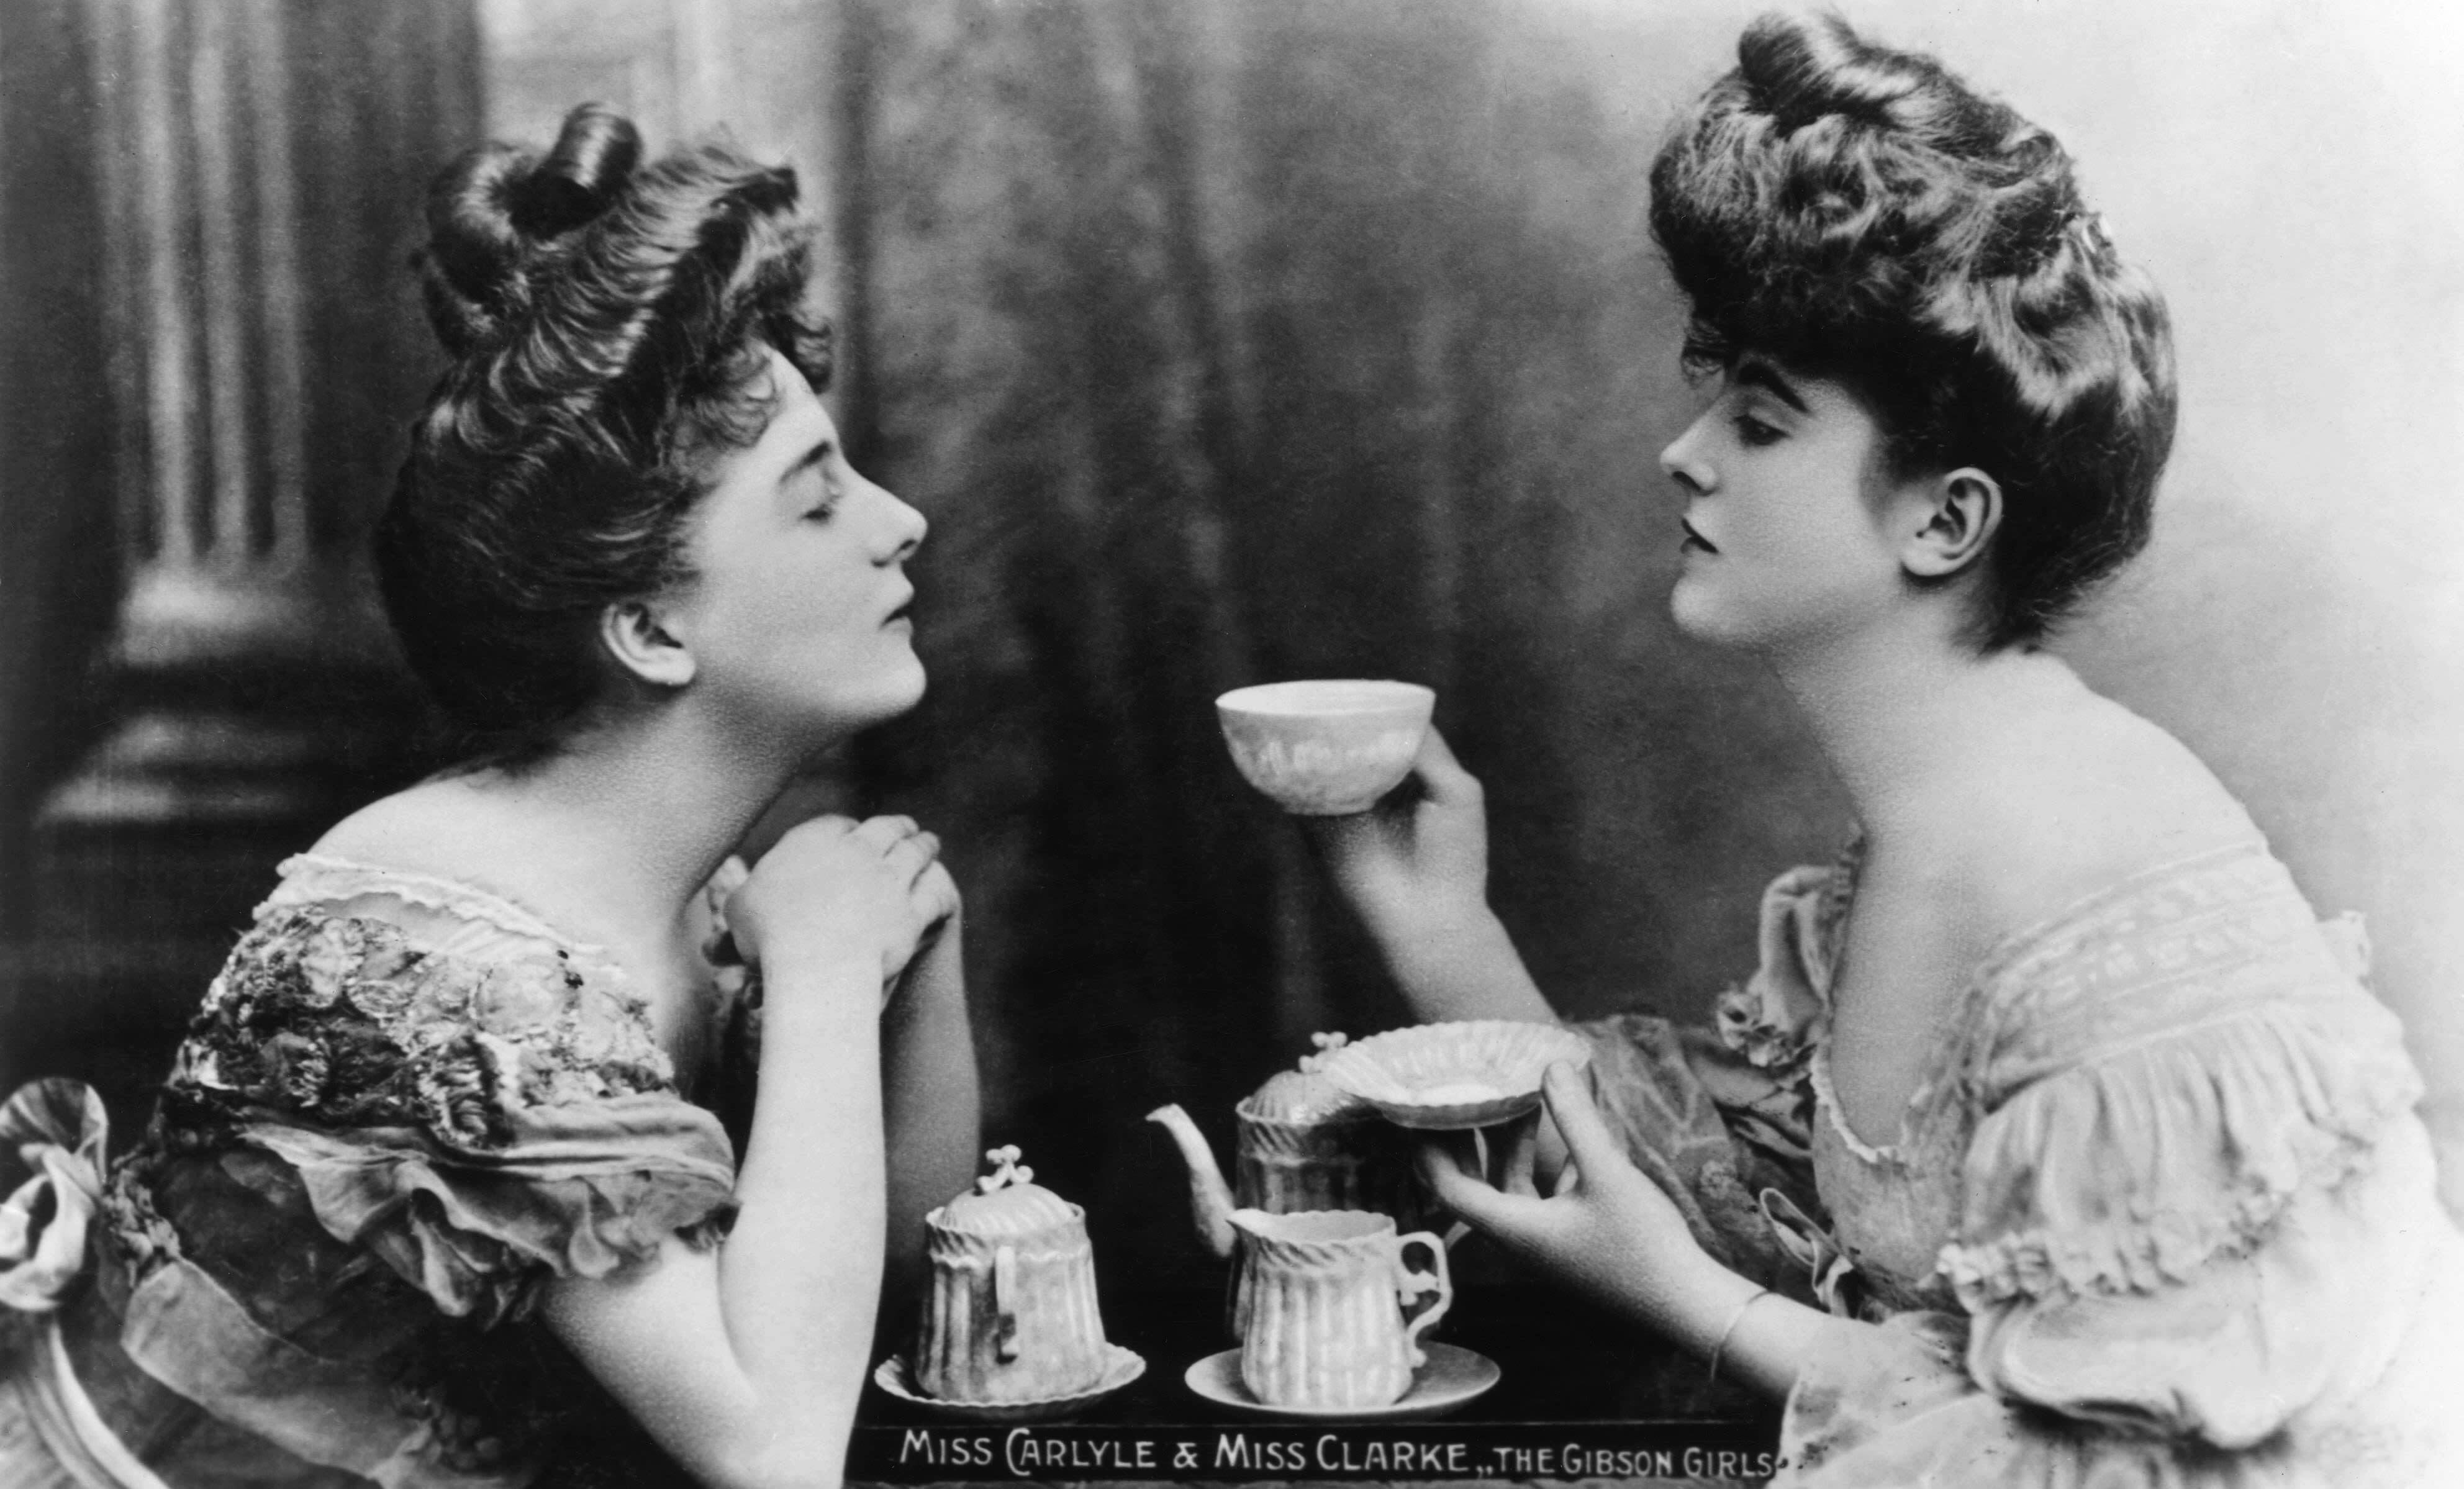 Tea & Sympathy Podcast